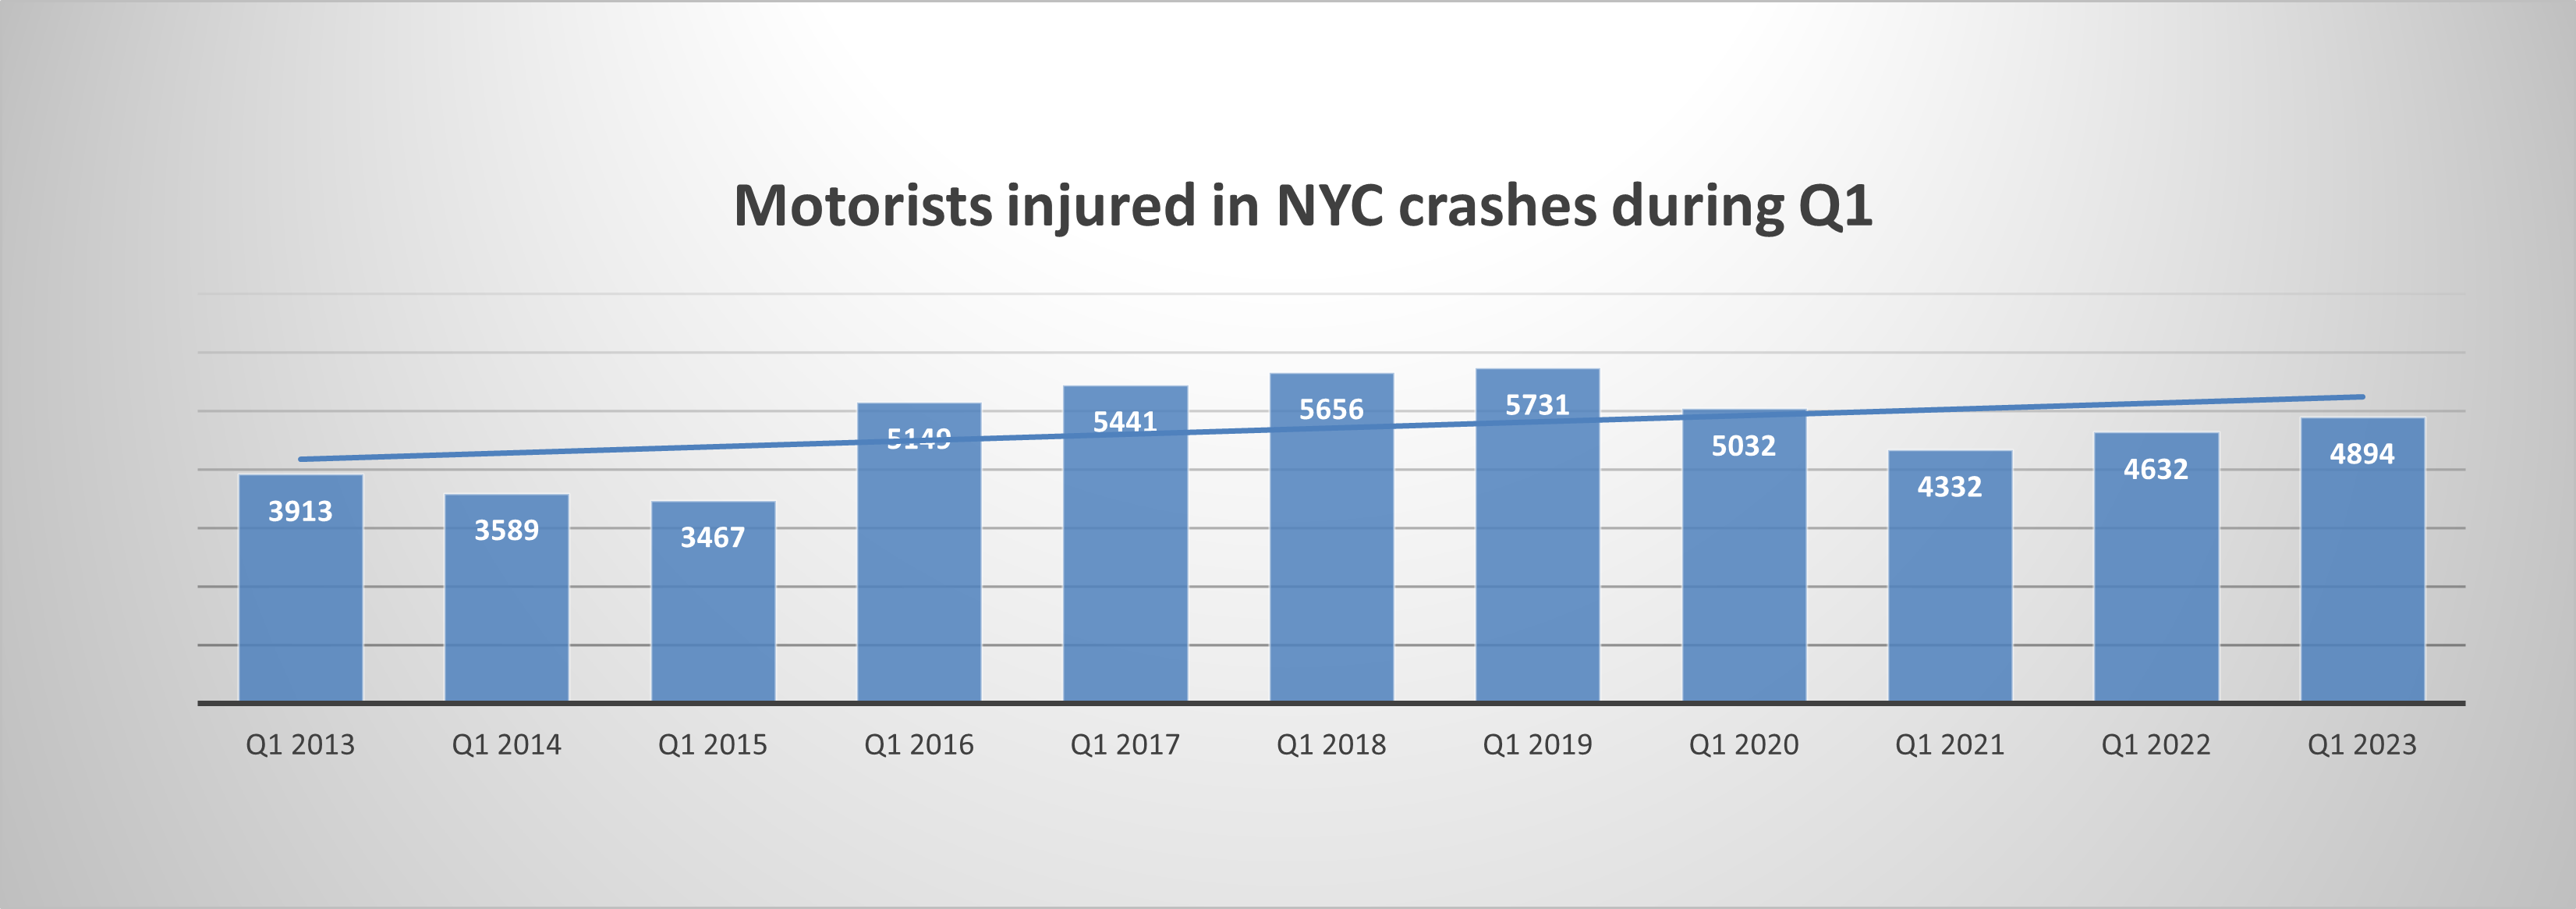 Motorist injuries NYC Q1 2023